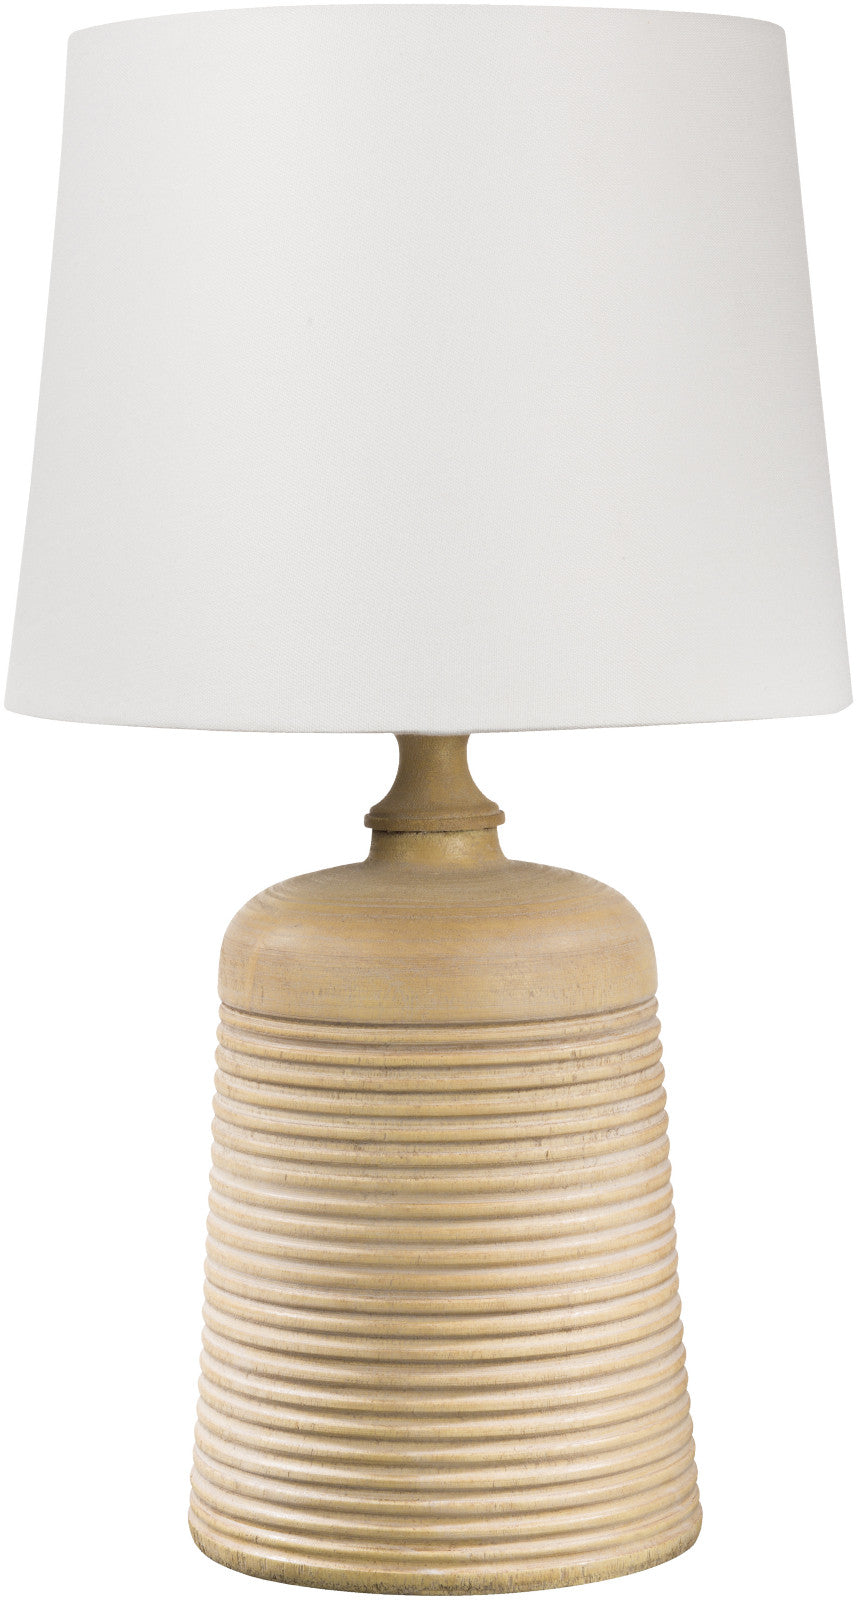 Surya Carter CTLP-001 White Lamp Table Lamp